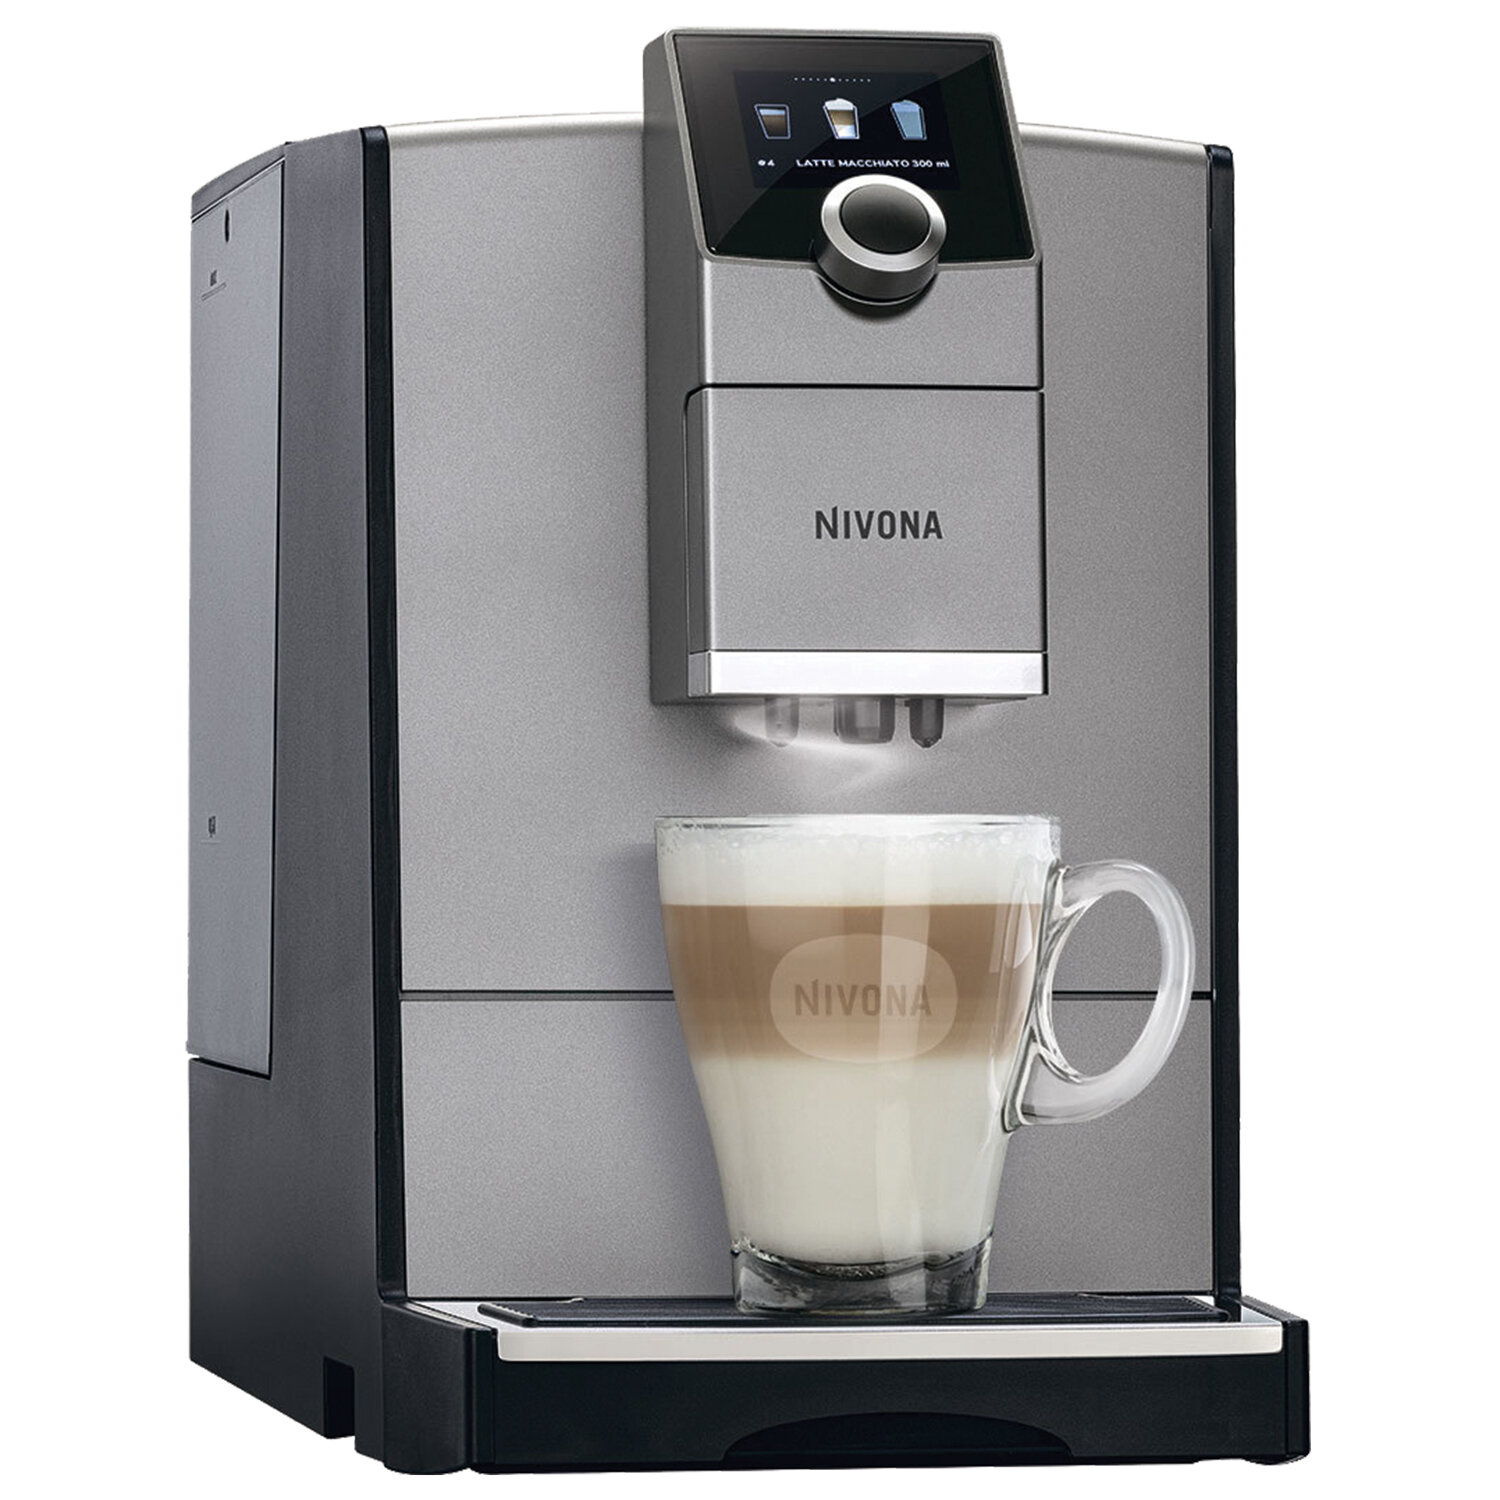  NIVONA CafeRomatica NICR795